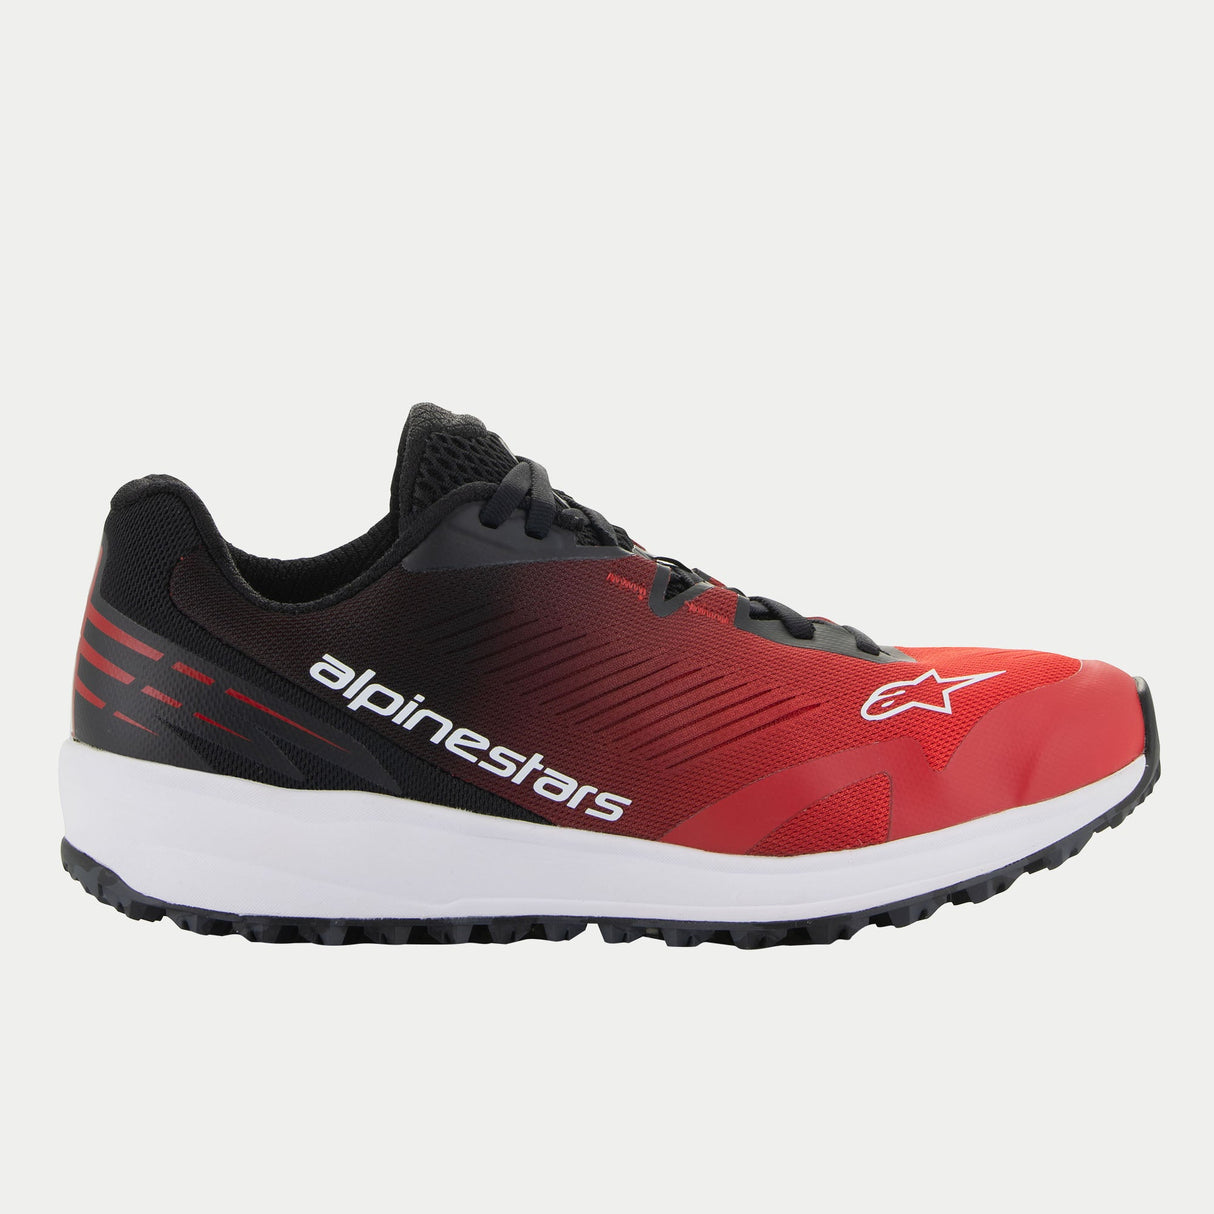 Alpinestars Meta Road V2 Shoes - Red/Black/White